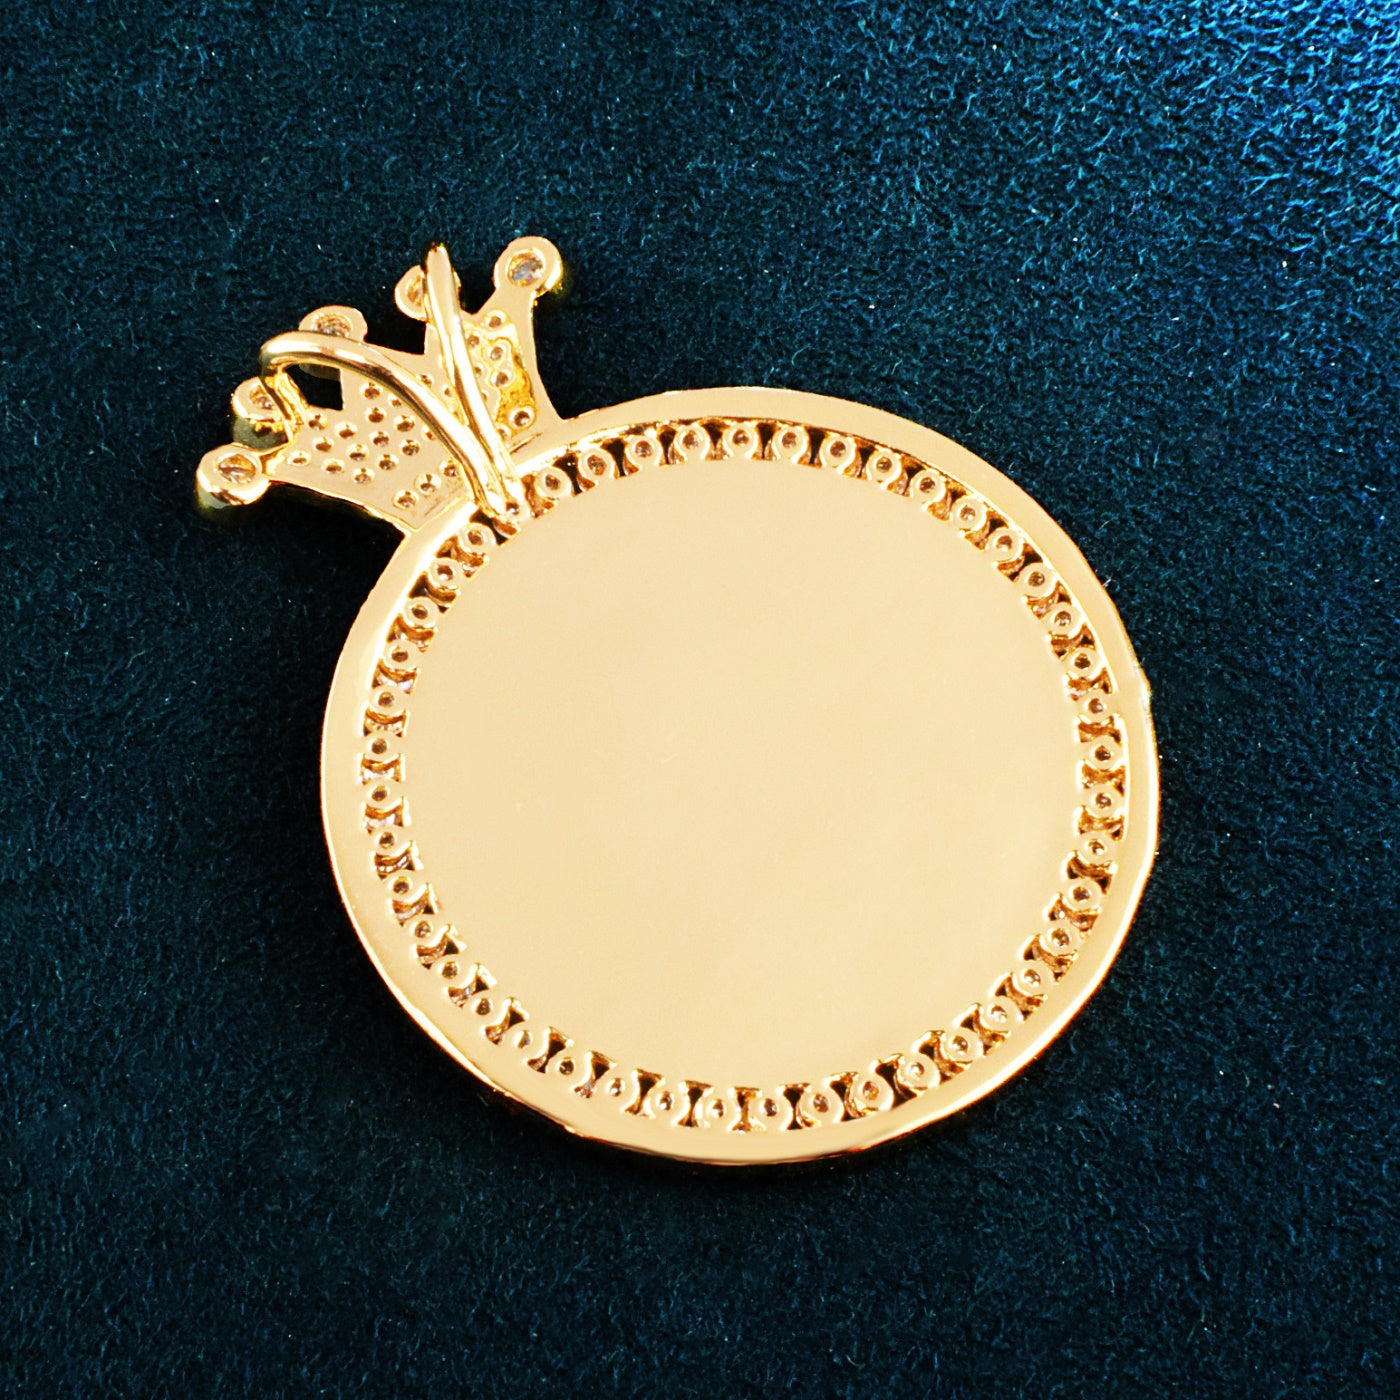 Crown Round Photo Necklace